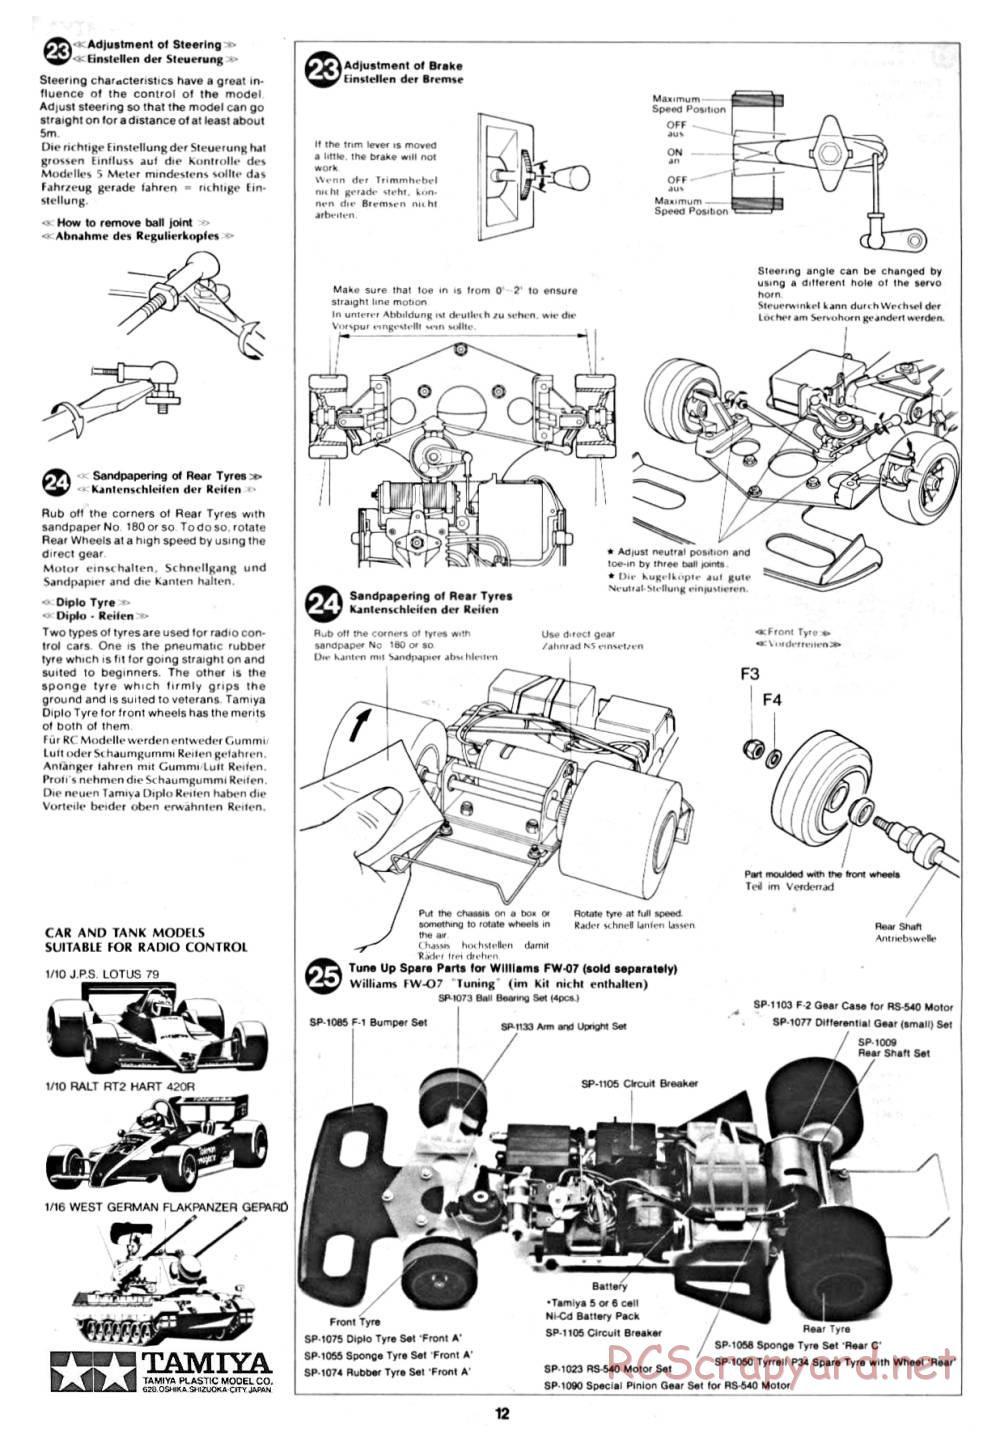 Tamiya - Williams FW-07 (CS) - 58019 - Manual - Page 12